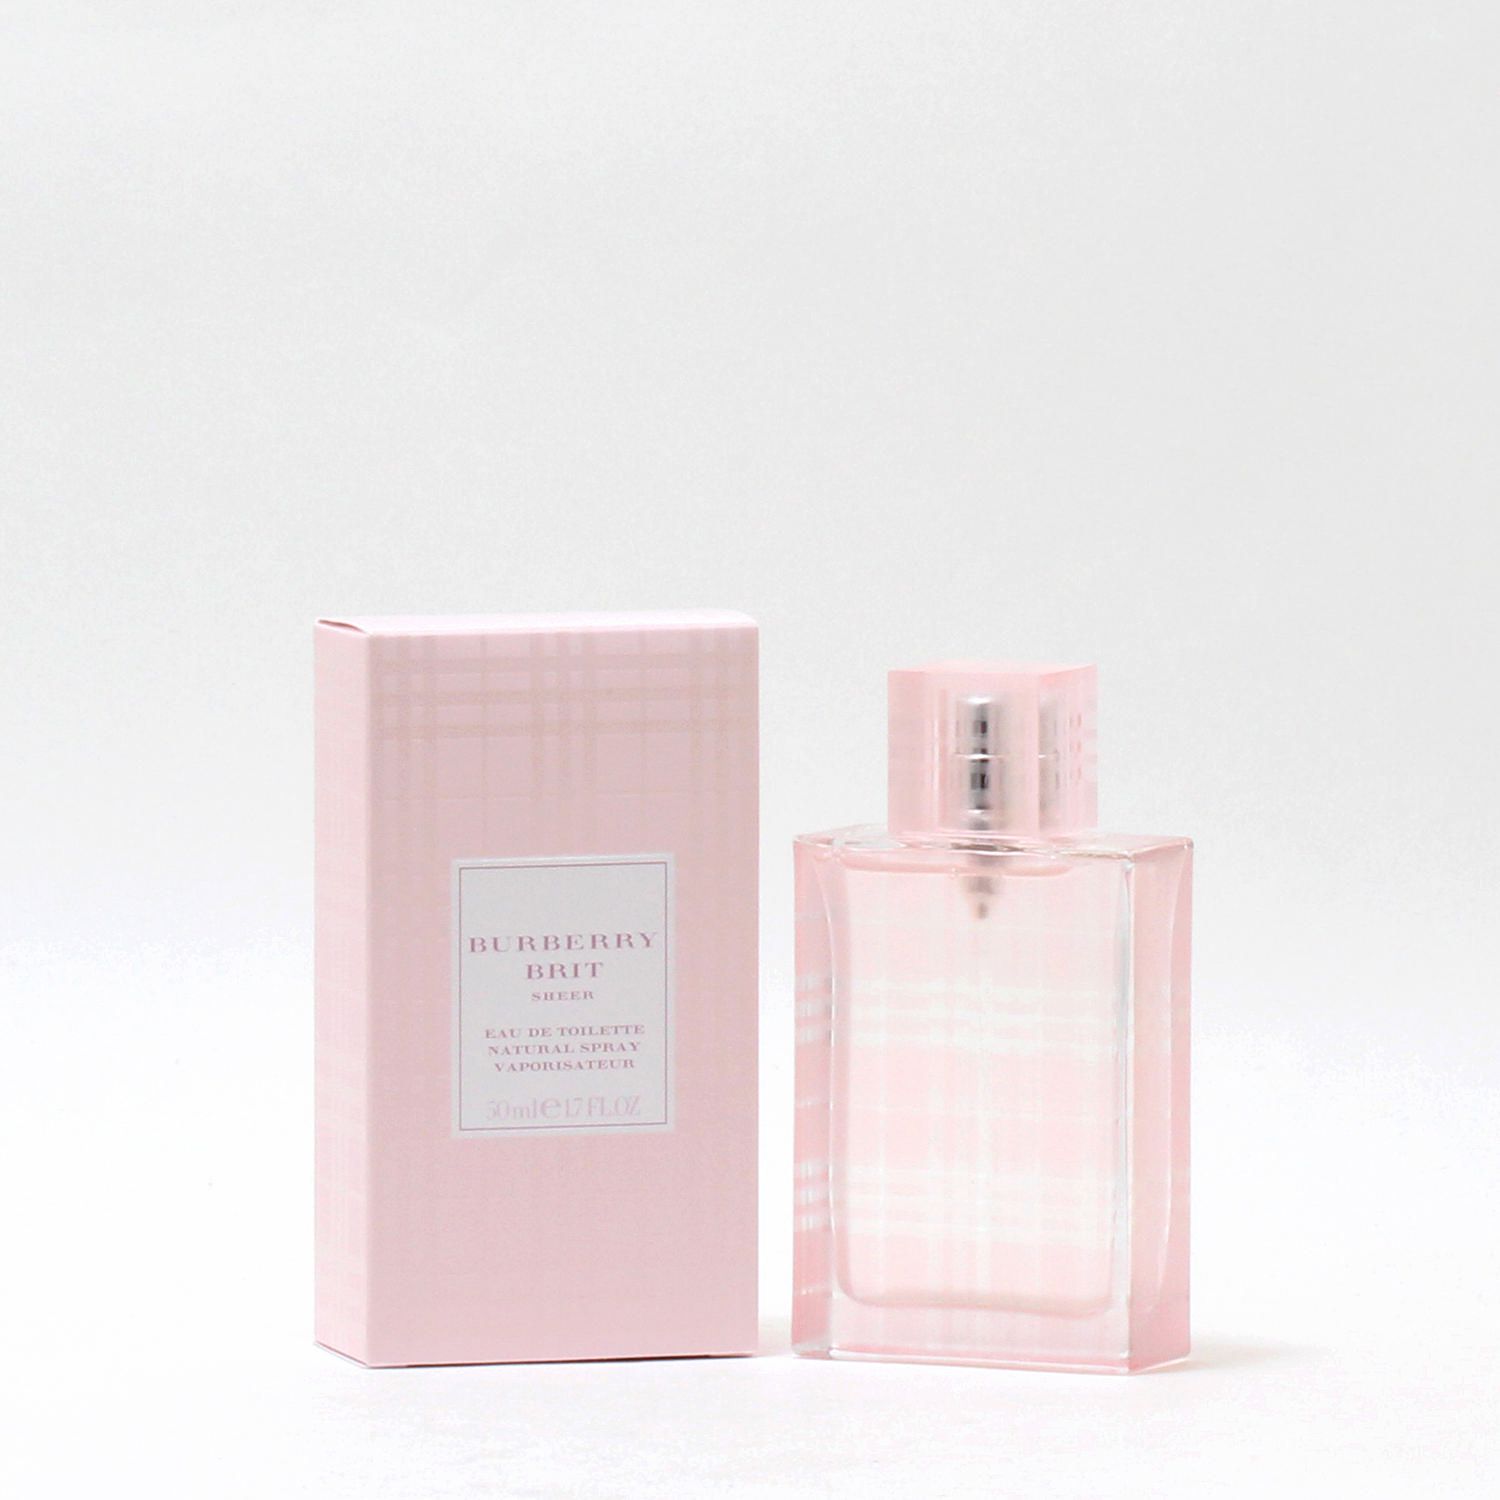 pink burberry perfume